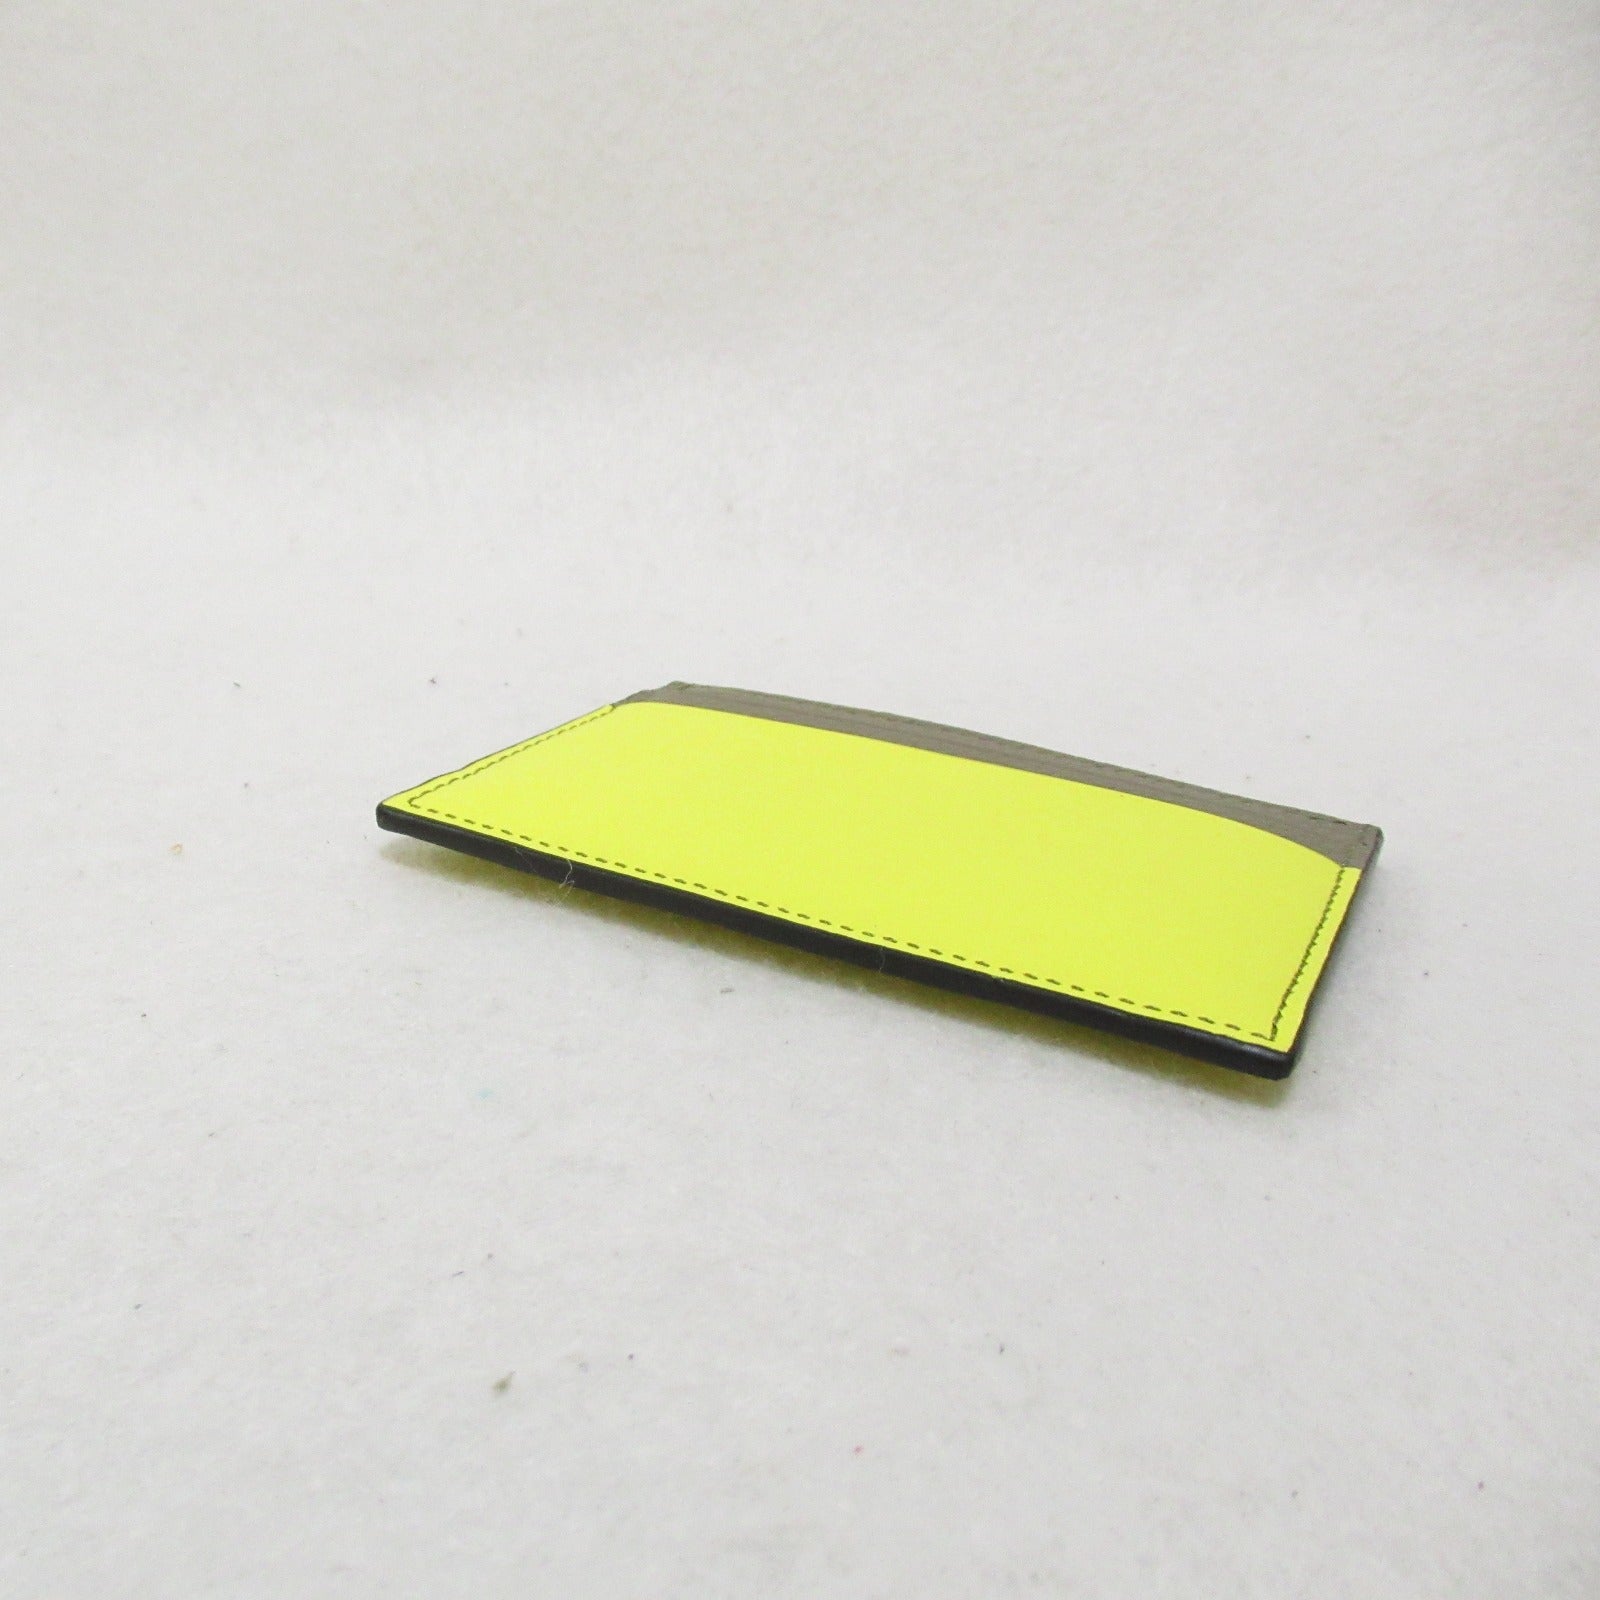 Loewe LOEWE Card Box Accessories  Leather  Brown Yellow C314322X011817